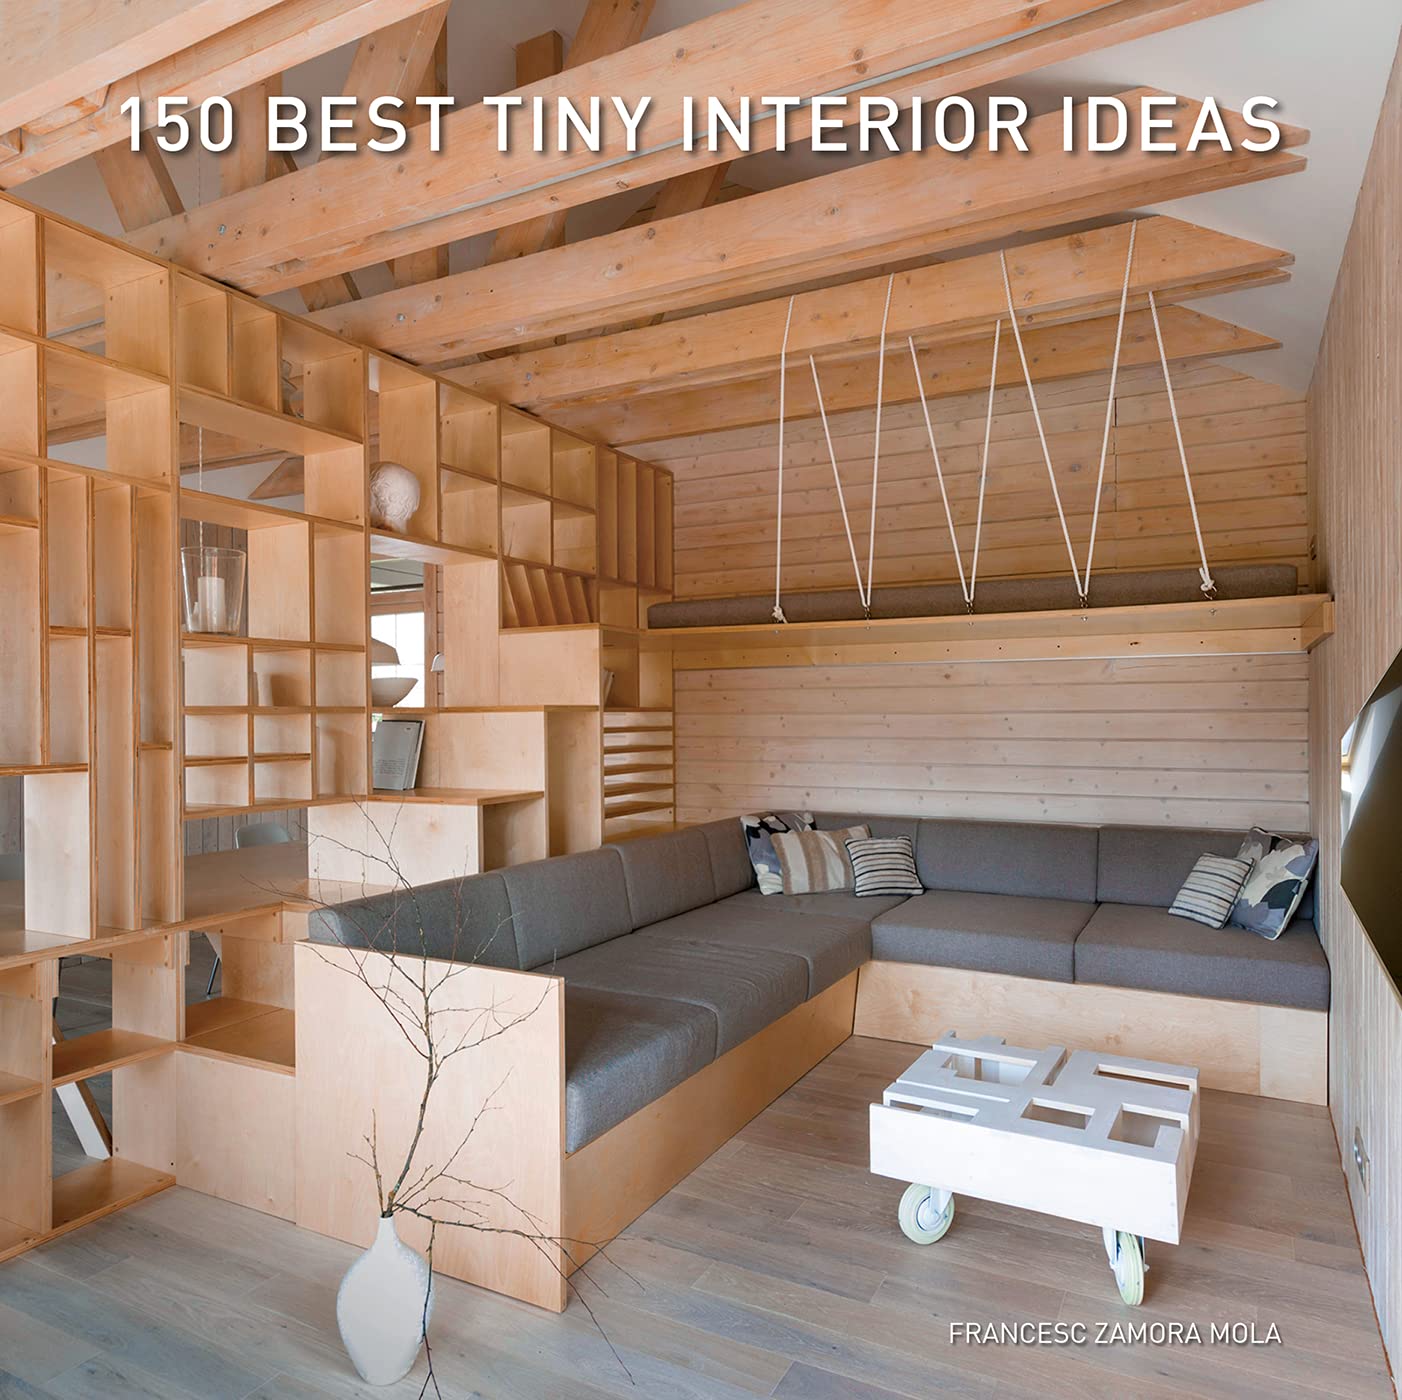 150 Best Tiny Interior Ideas (Hardcover)